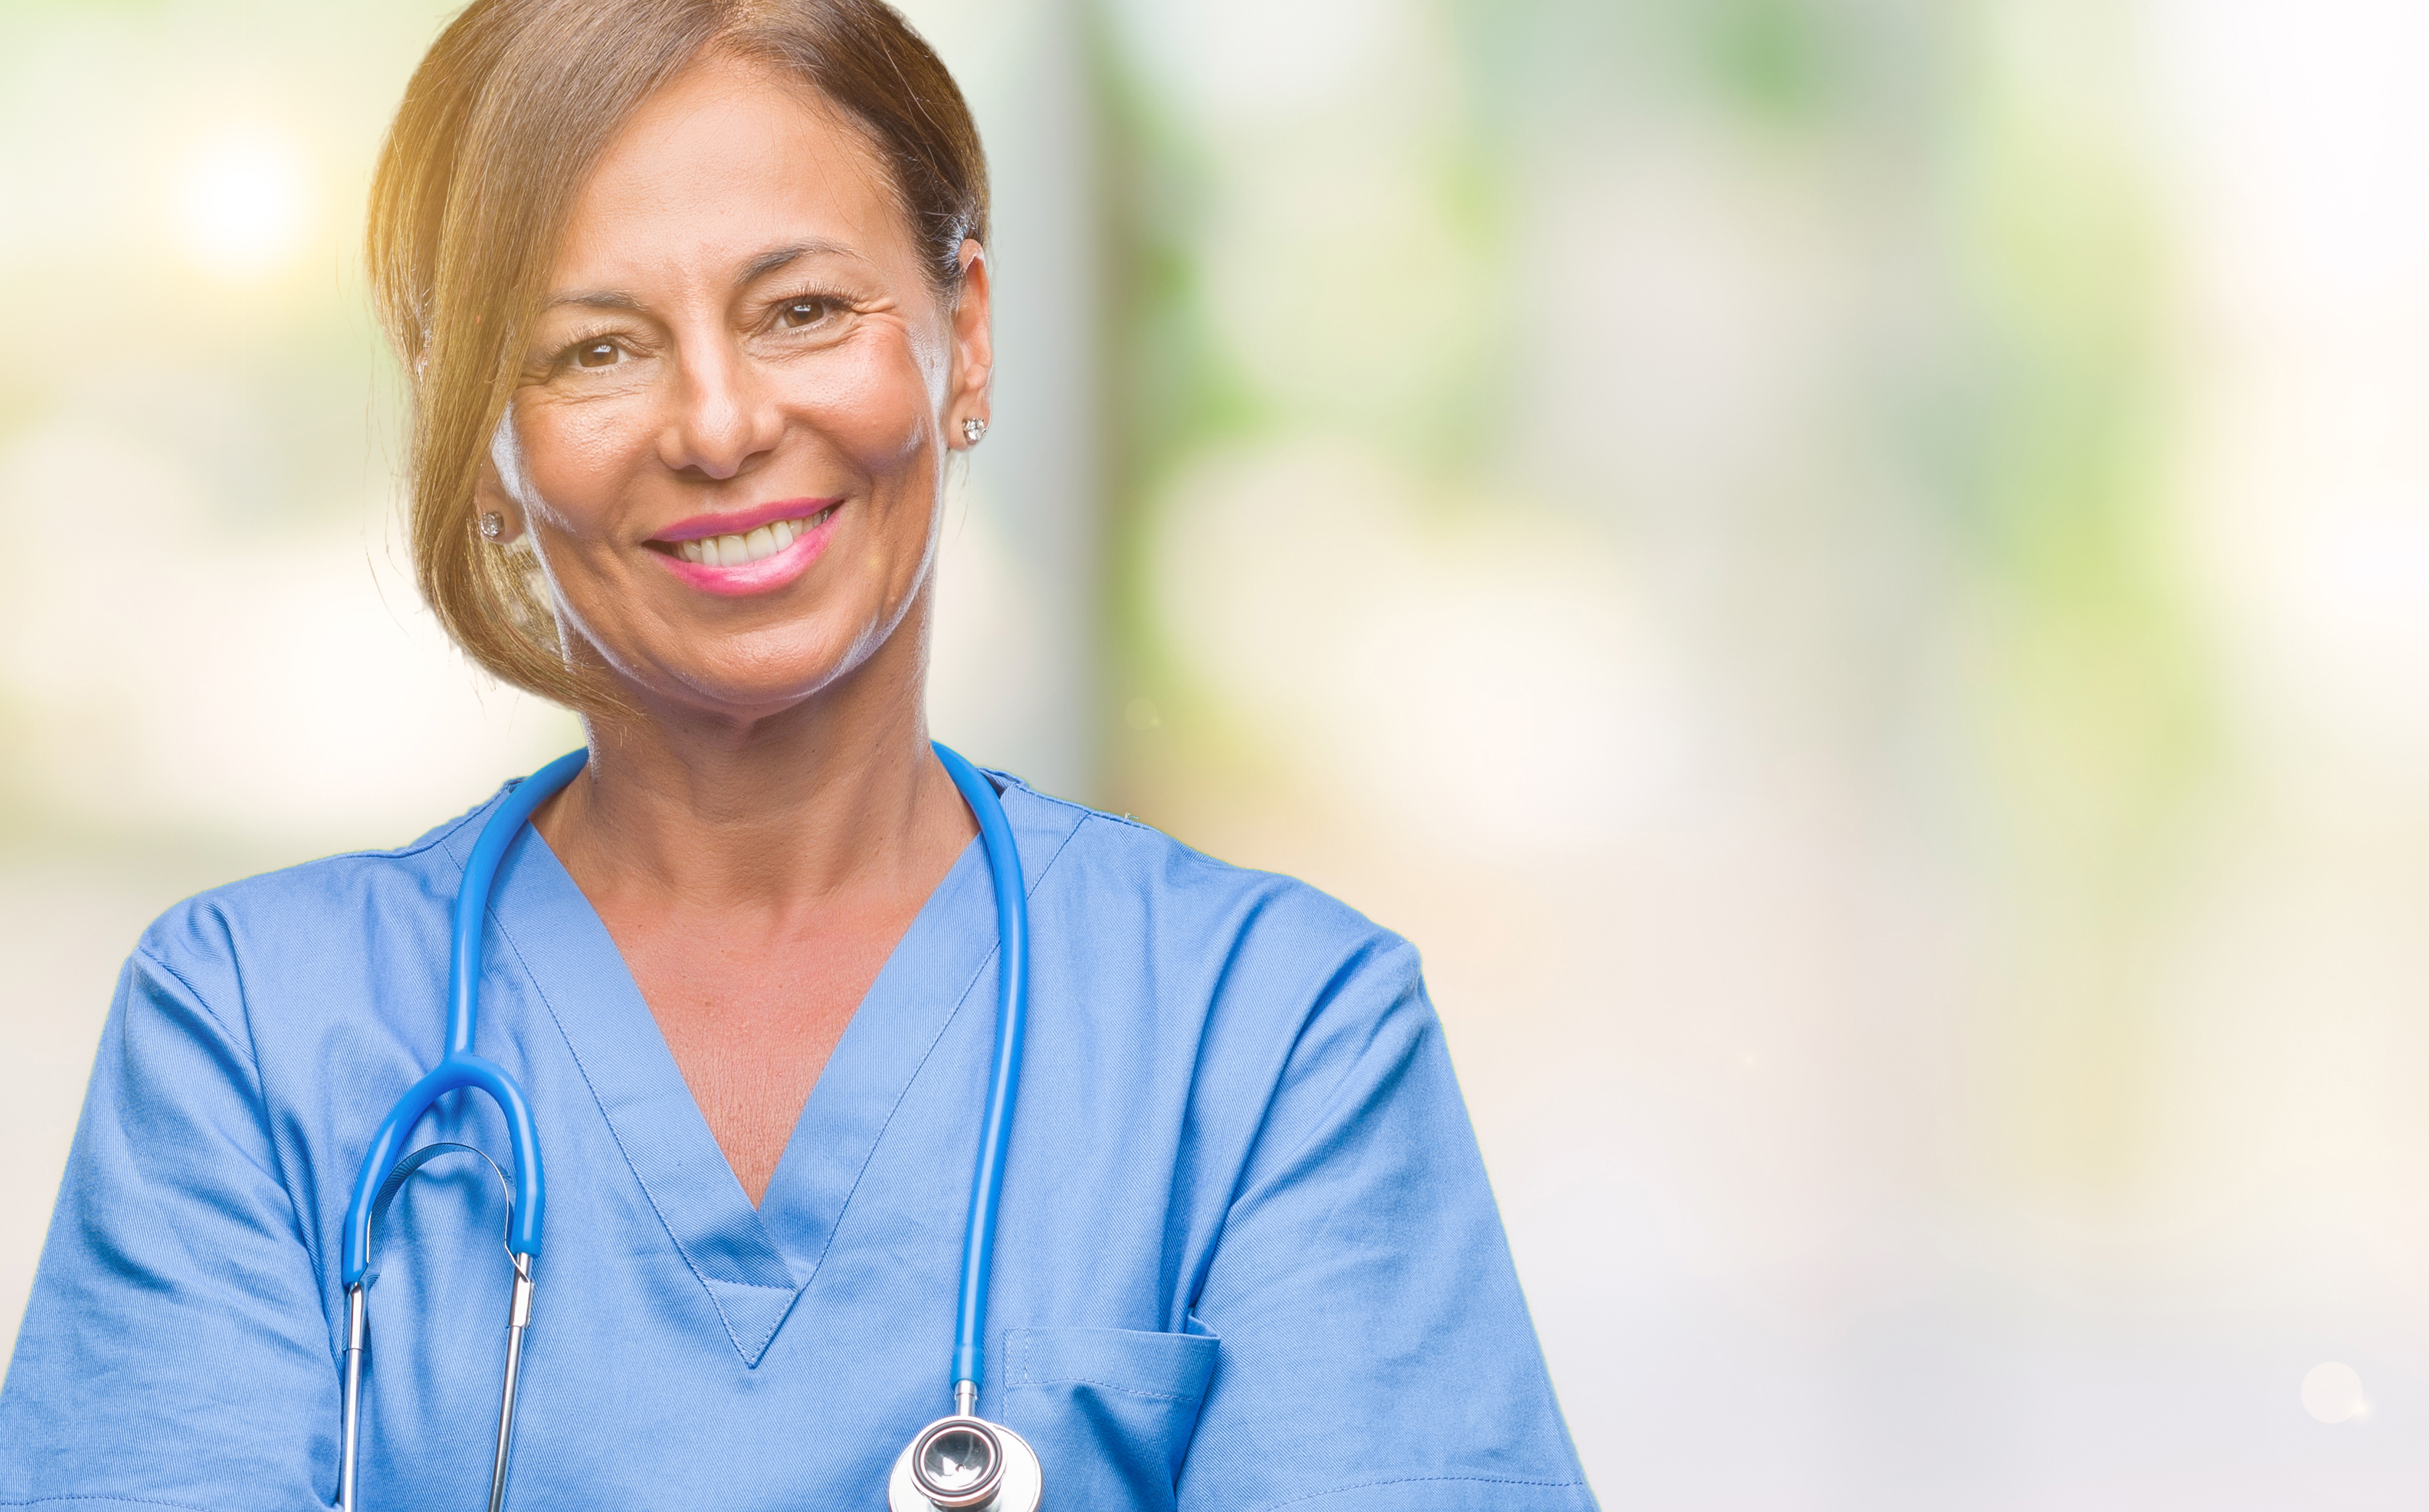 A female nurse | Source: Shutterstock